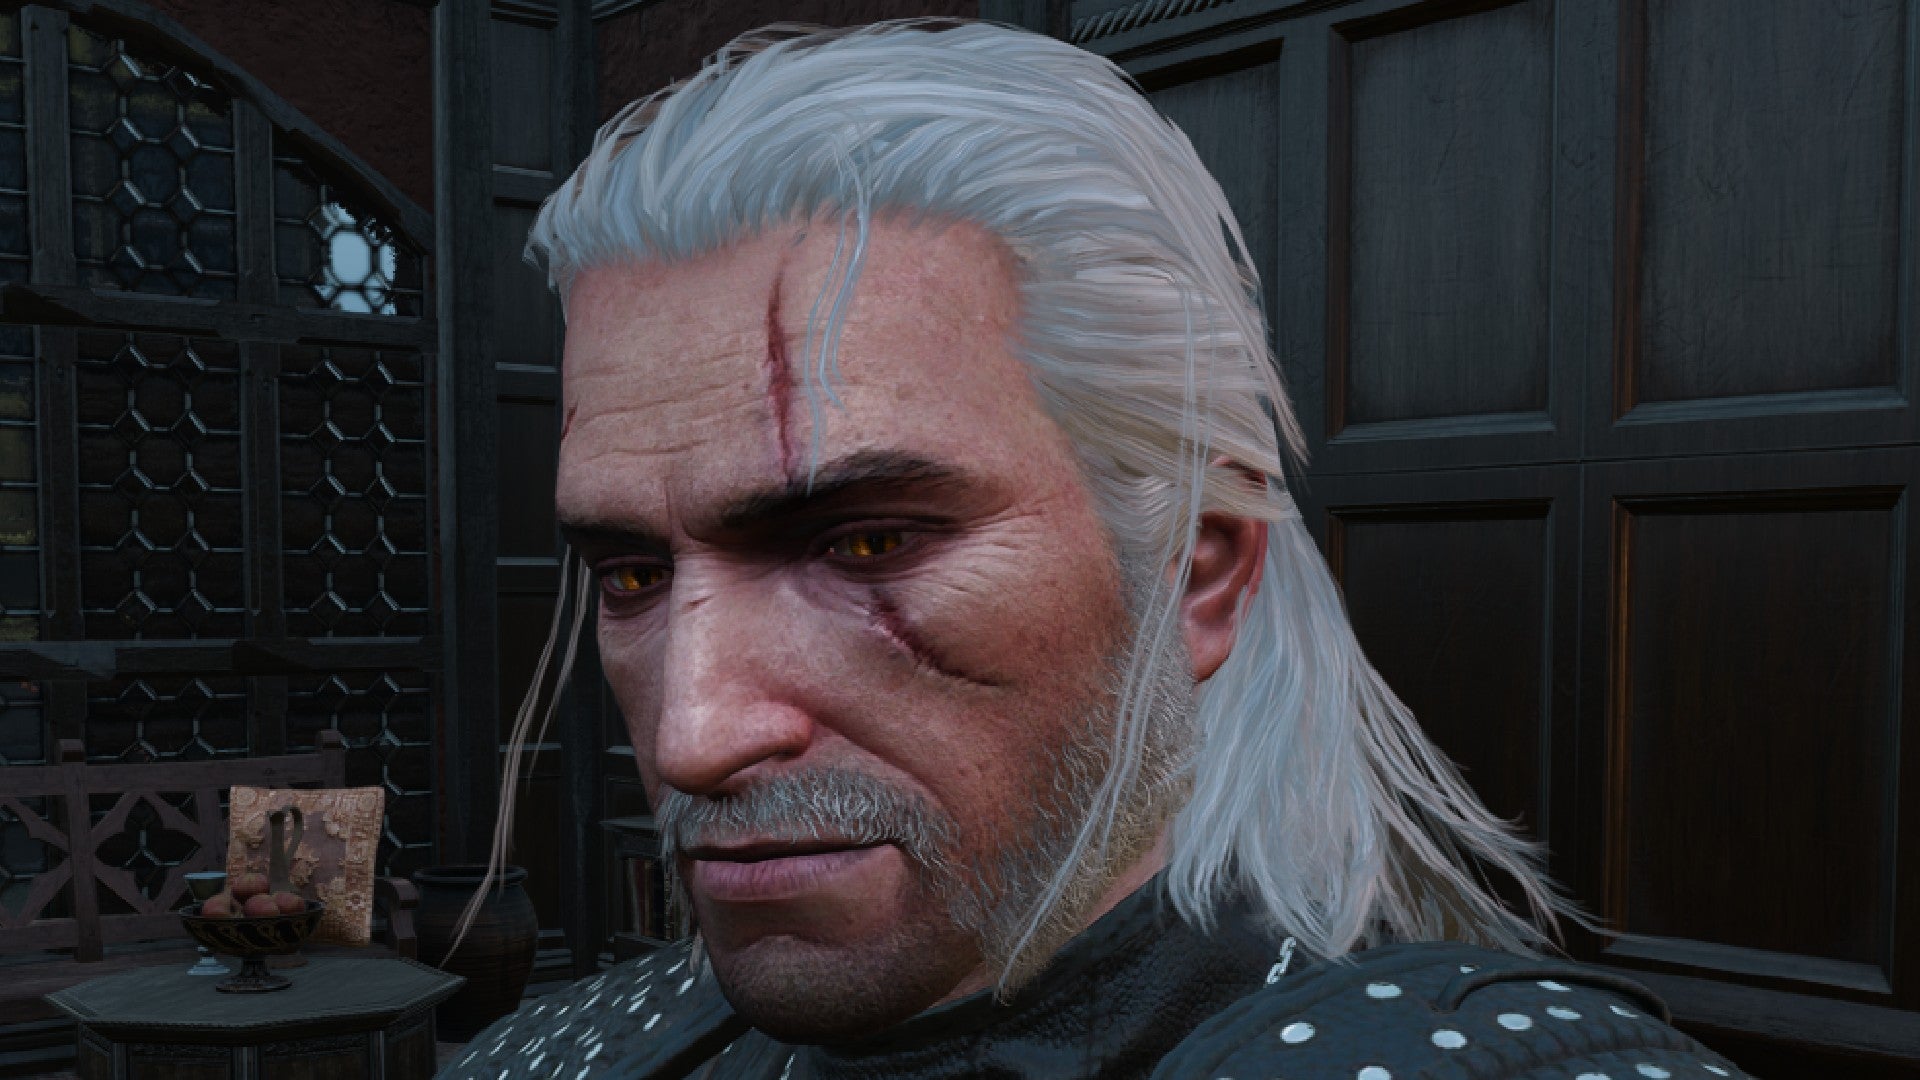 Imagen de Witcher 3 que muestra a Geralt con chuletas de cordero.